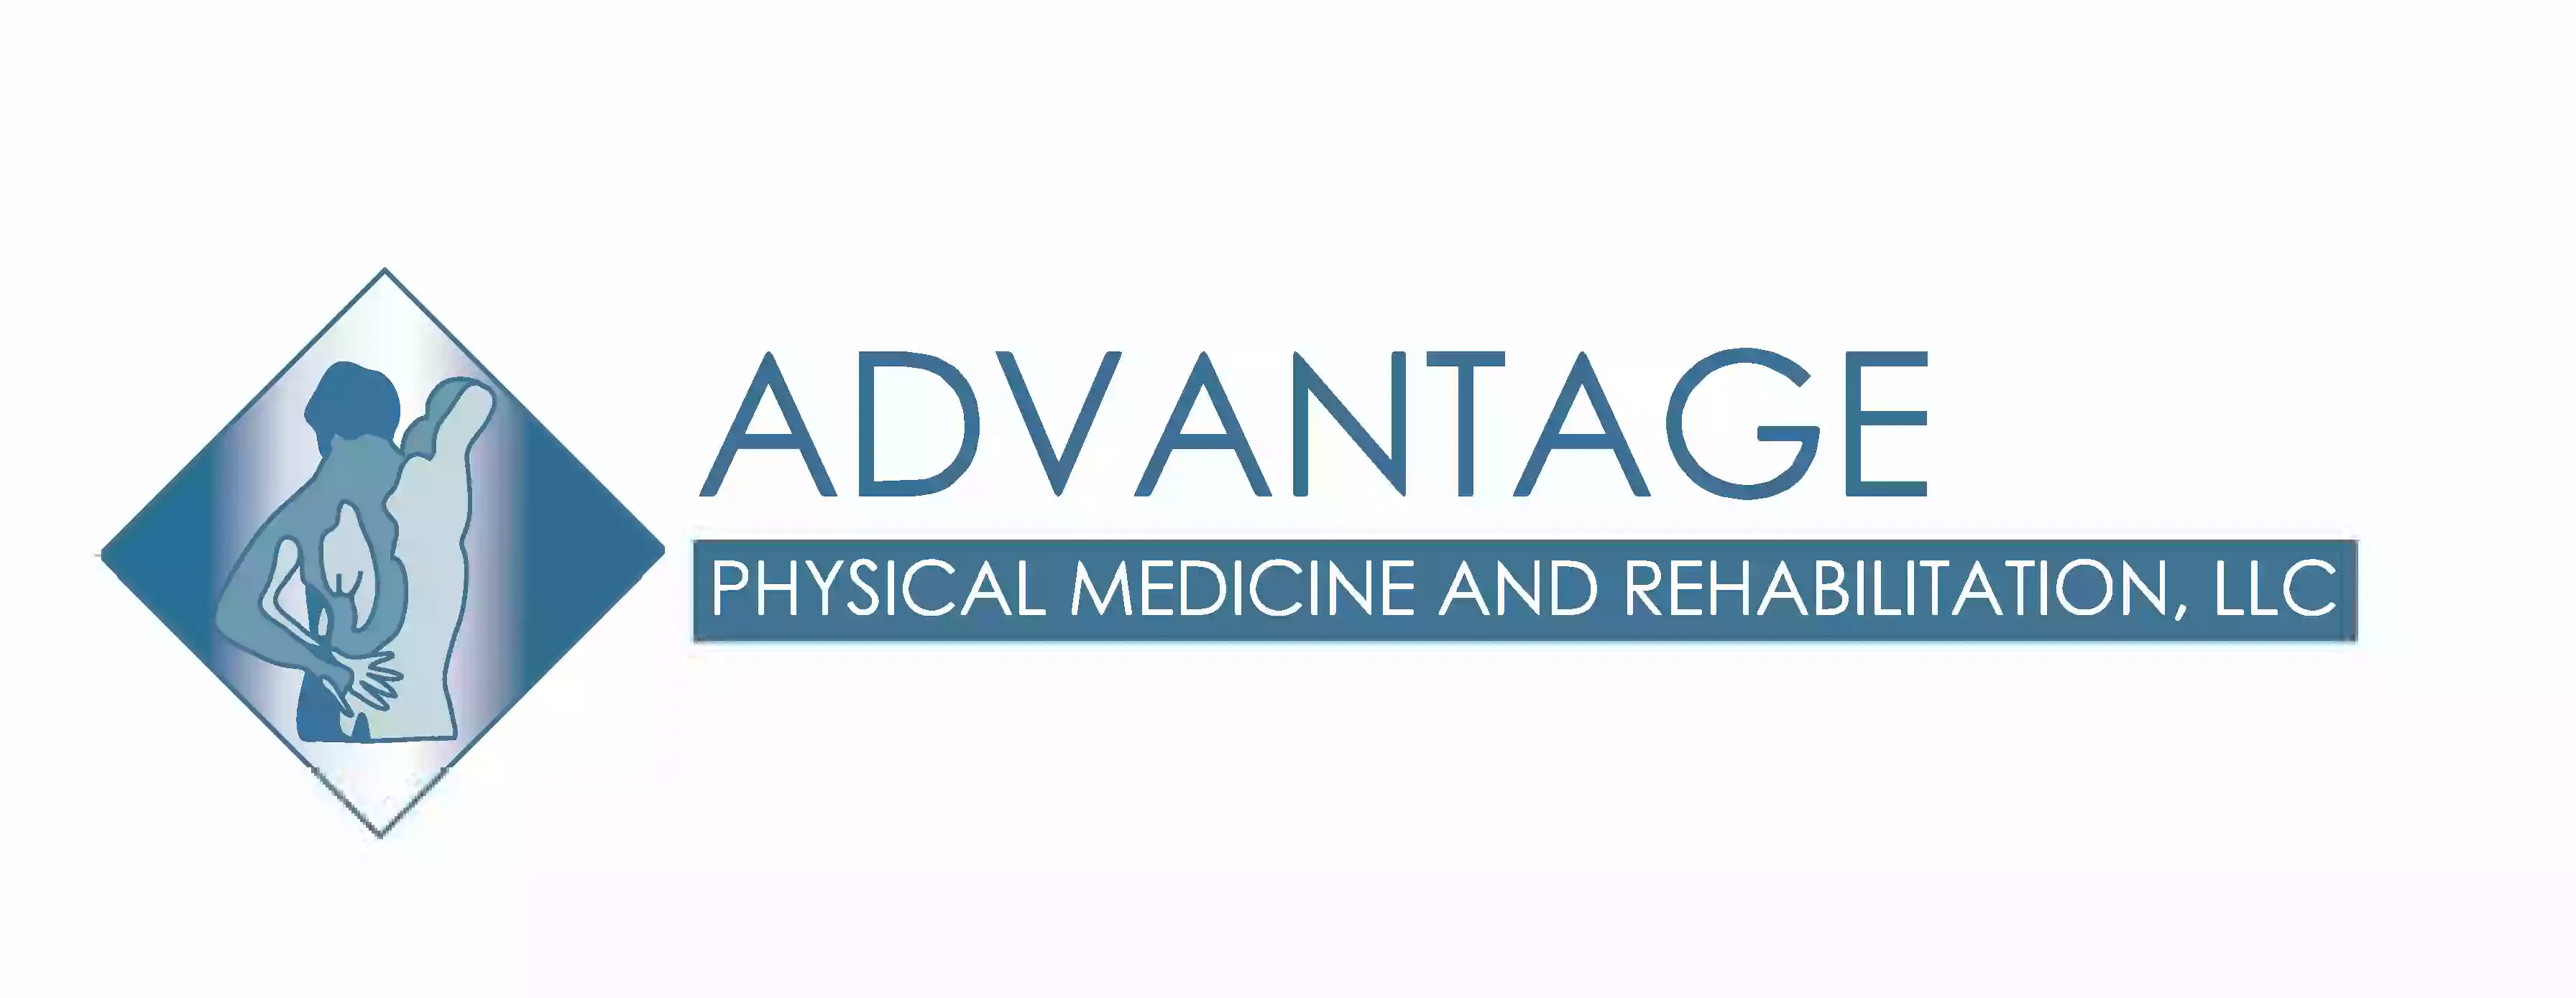 Advantage Physical Medicine & Rehabilitation, LLC